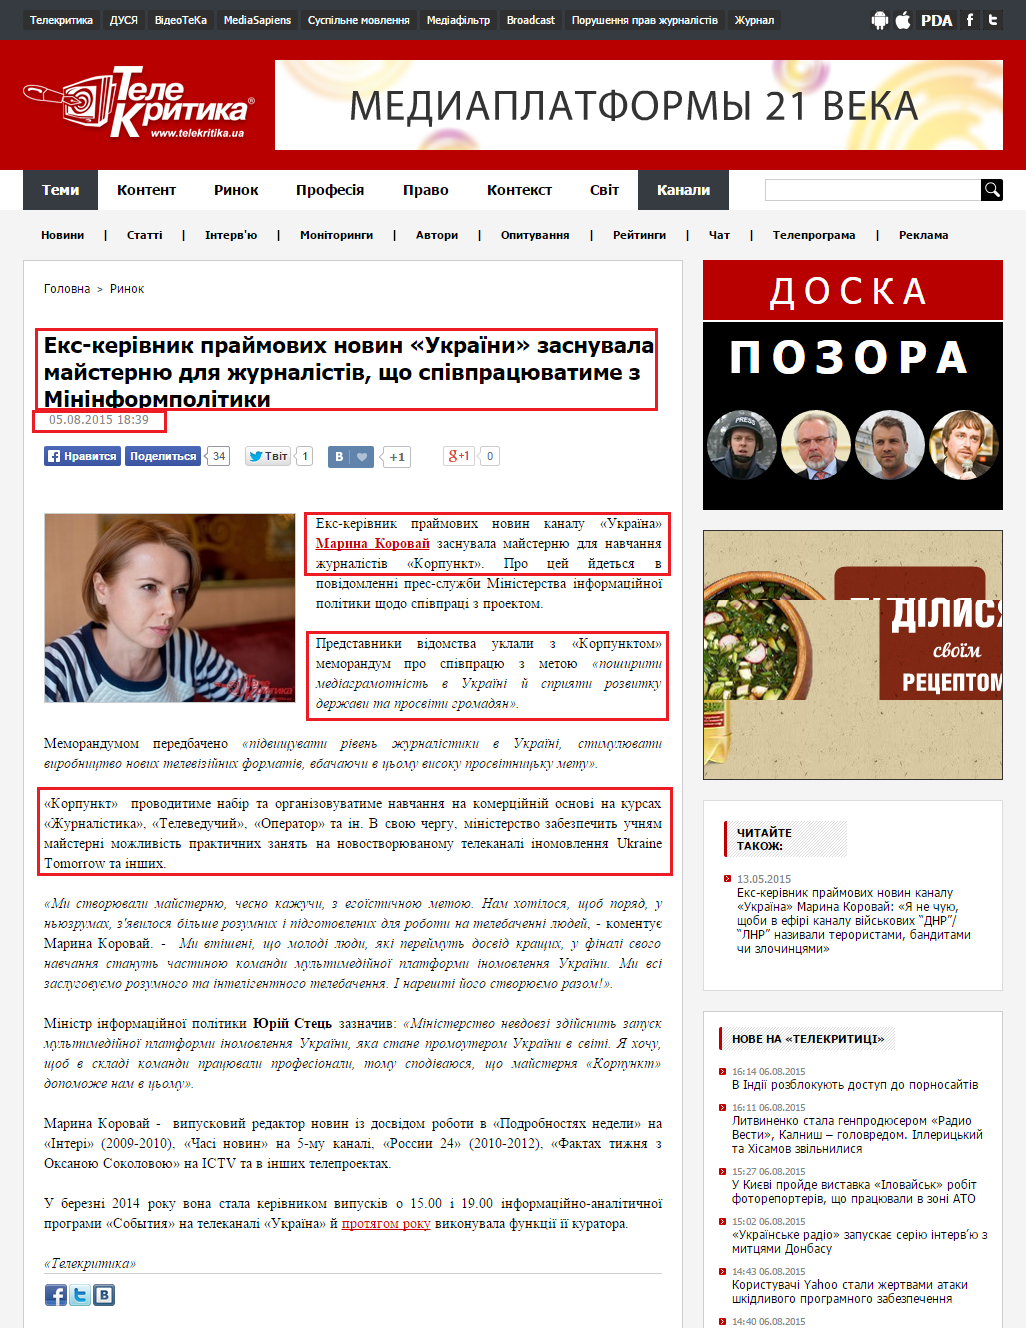 http://www.telekritika.ua/rinok/2015-08-05/109859